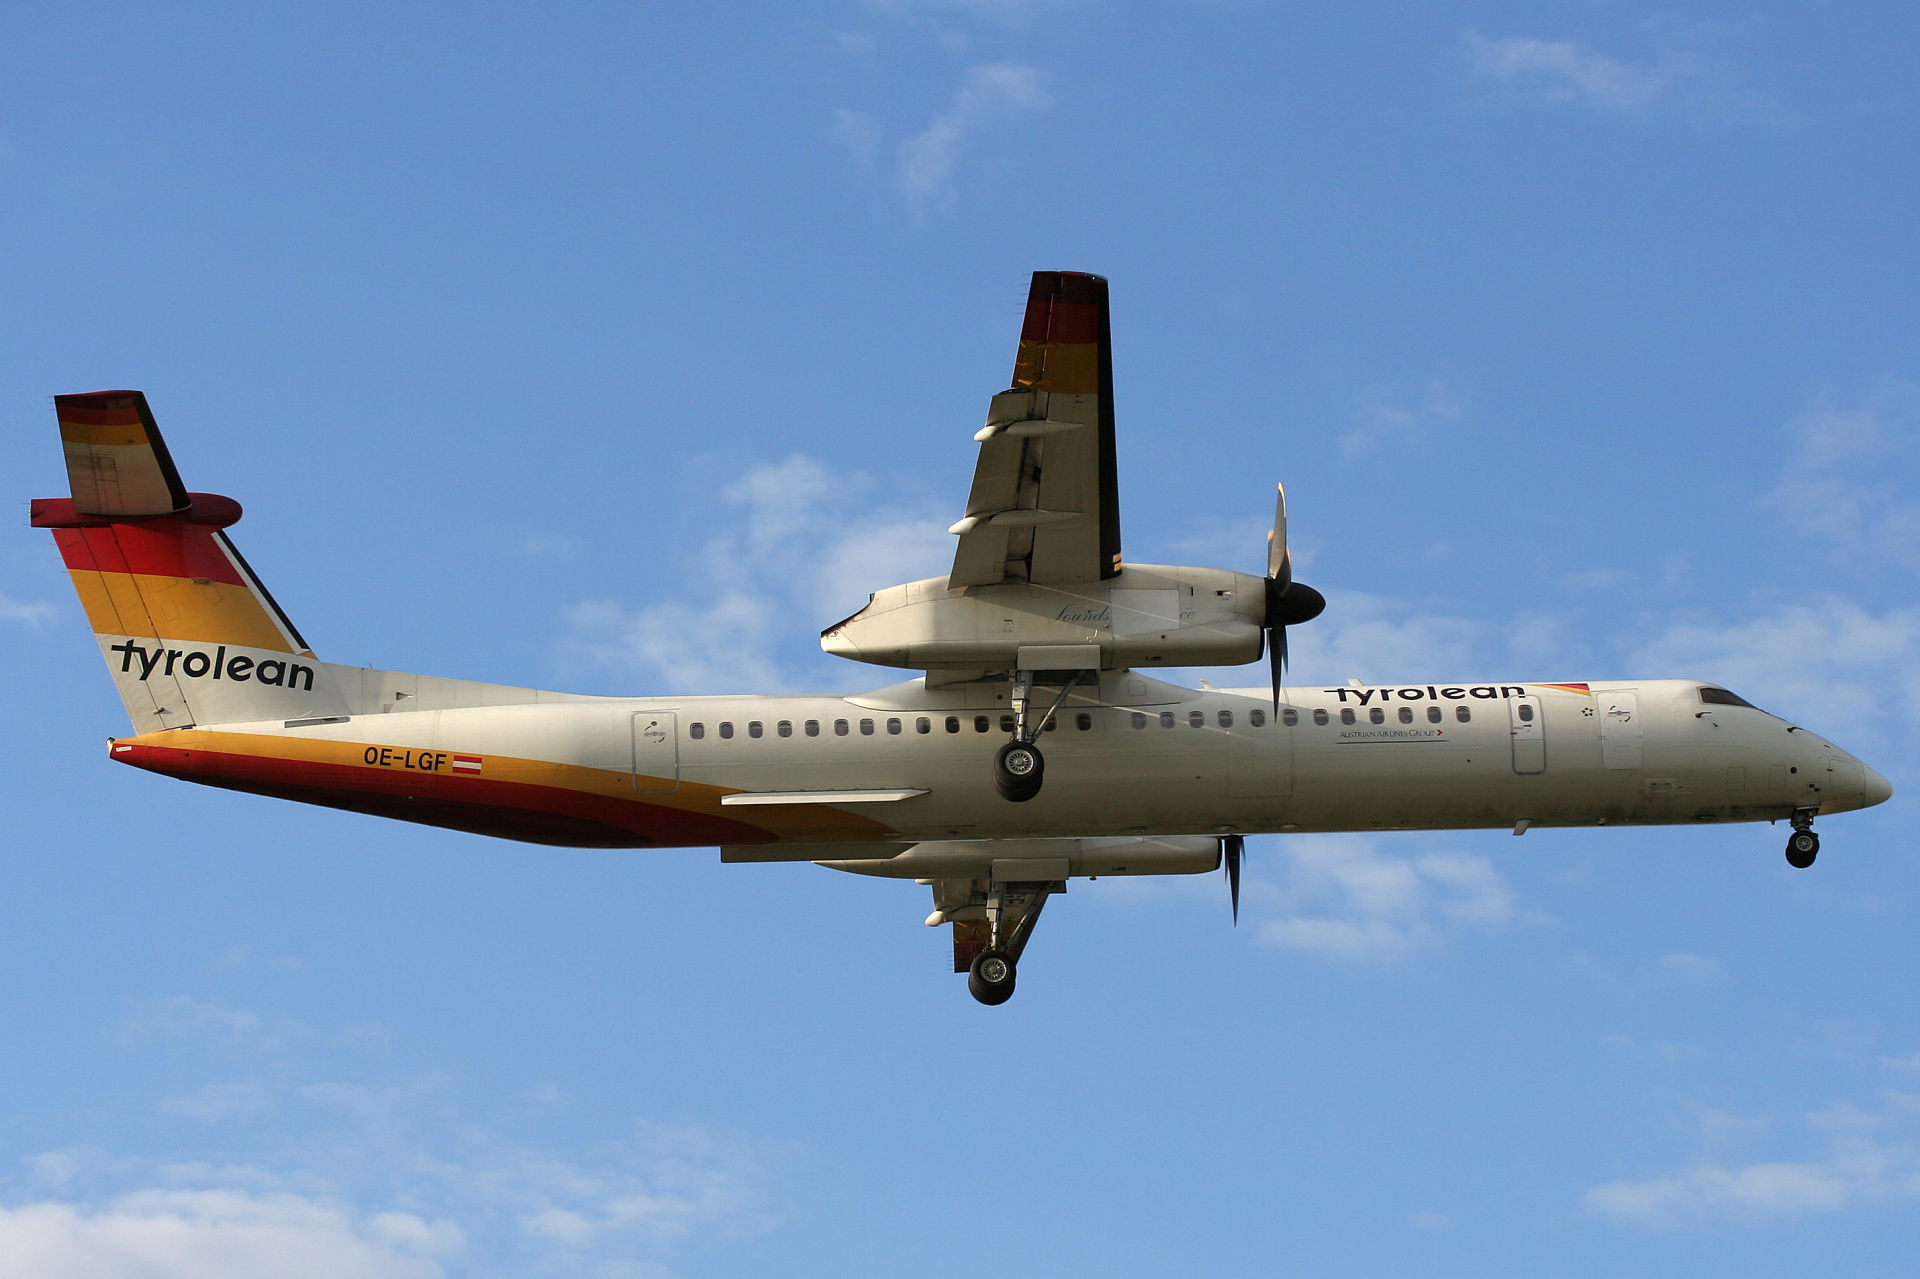 OE-LGF, Tyrolean Airlines (Aircraft » EPWA Spotting » De Havilland Canada DHC-8 Dash 8)